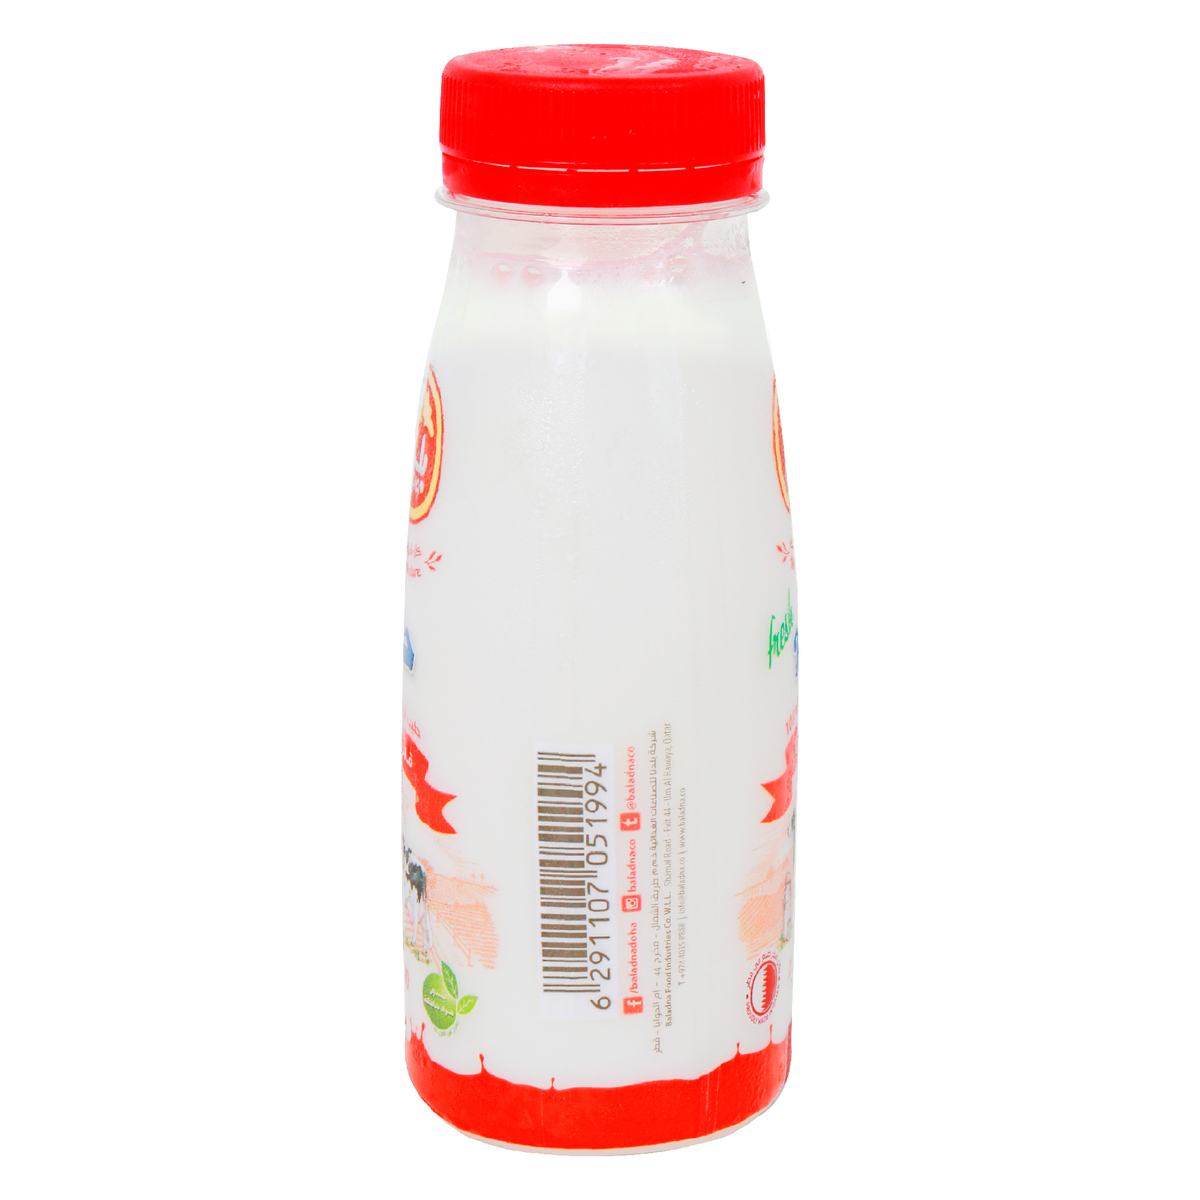 Baladna Fresh Milk Low Fat 200ml